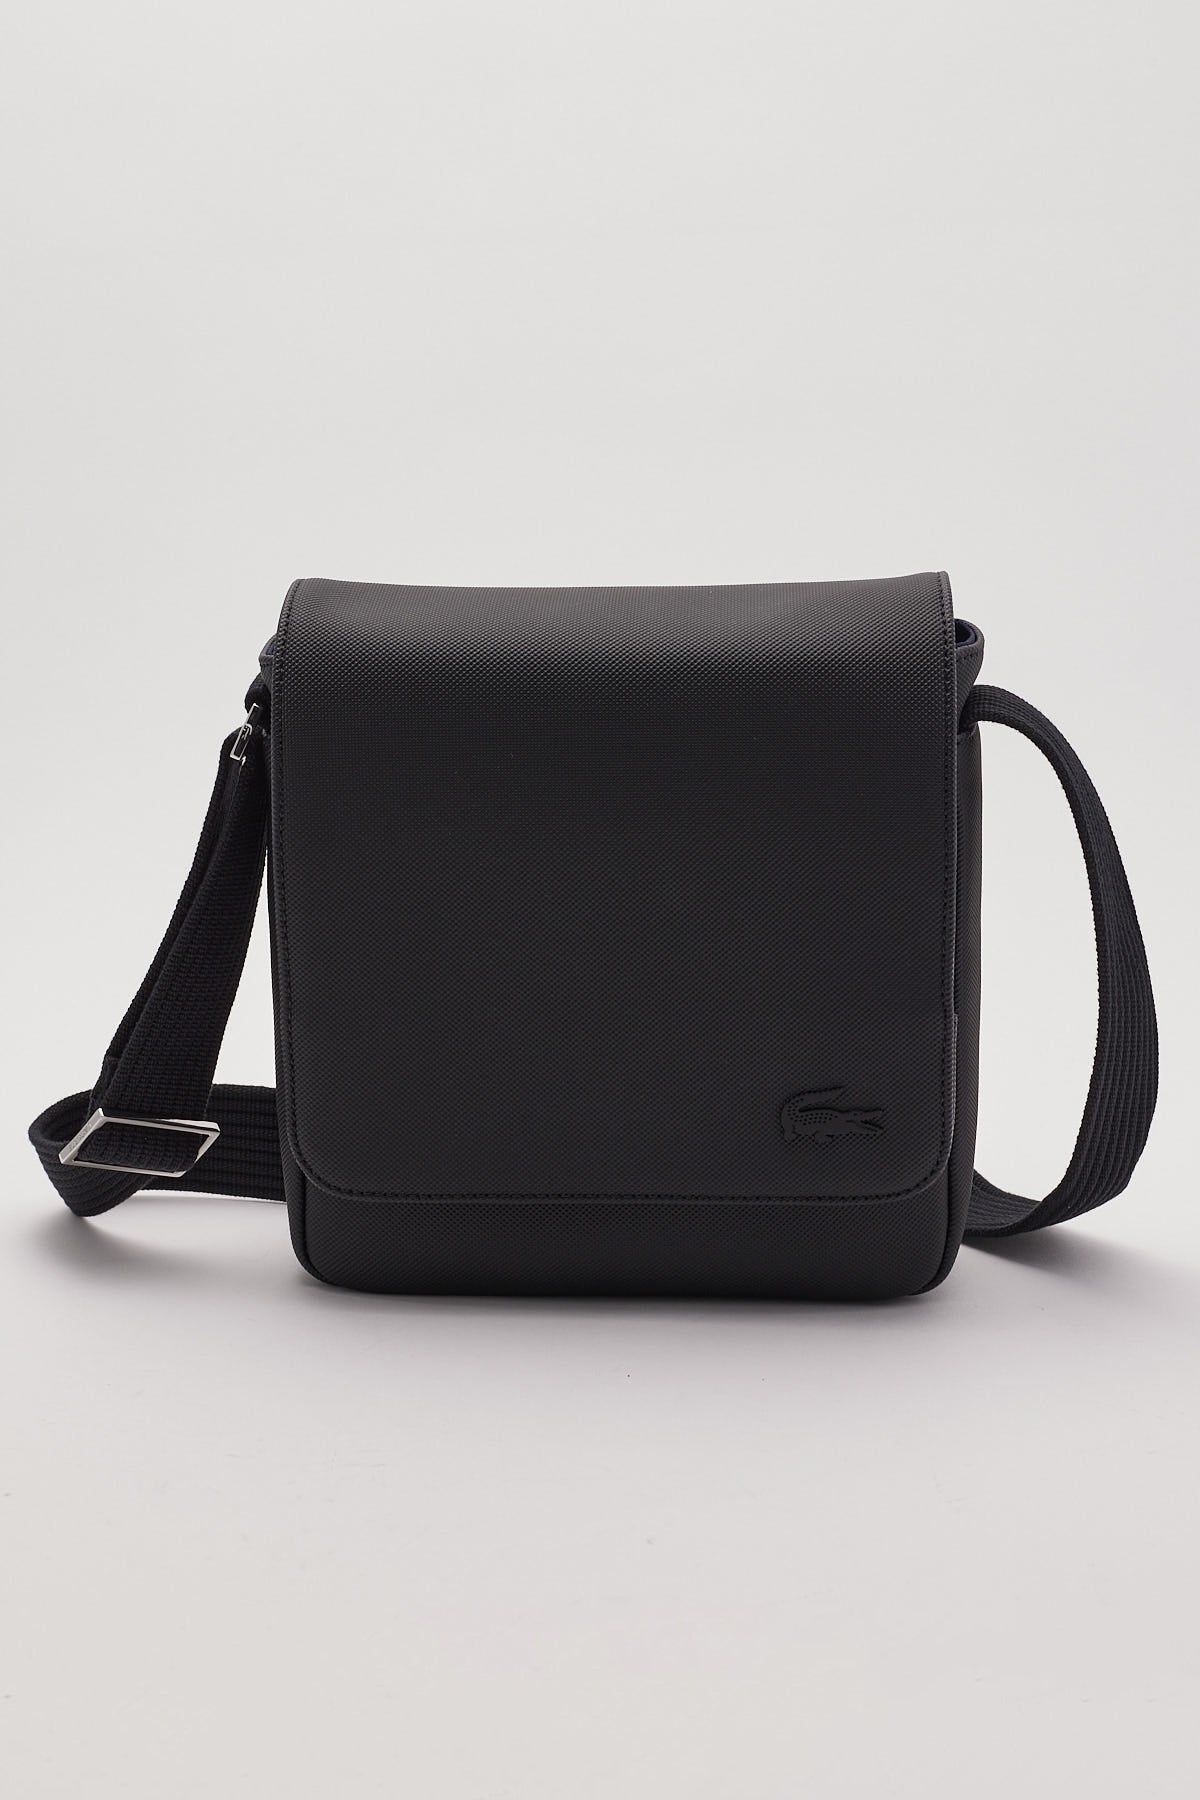 Lacoste Men's Classic Crossover Bag Black